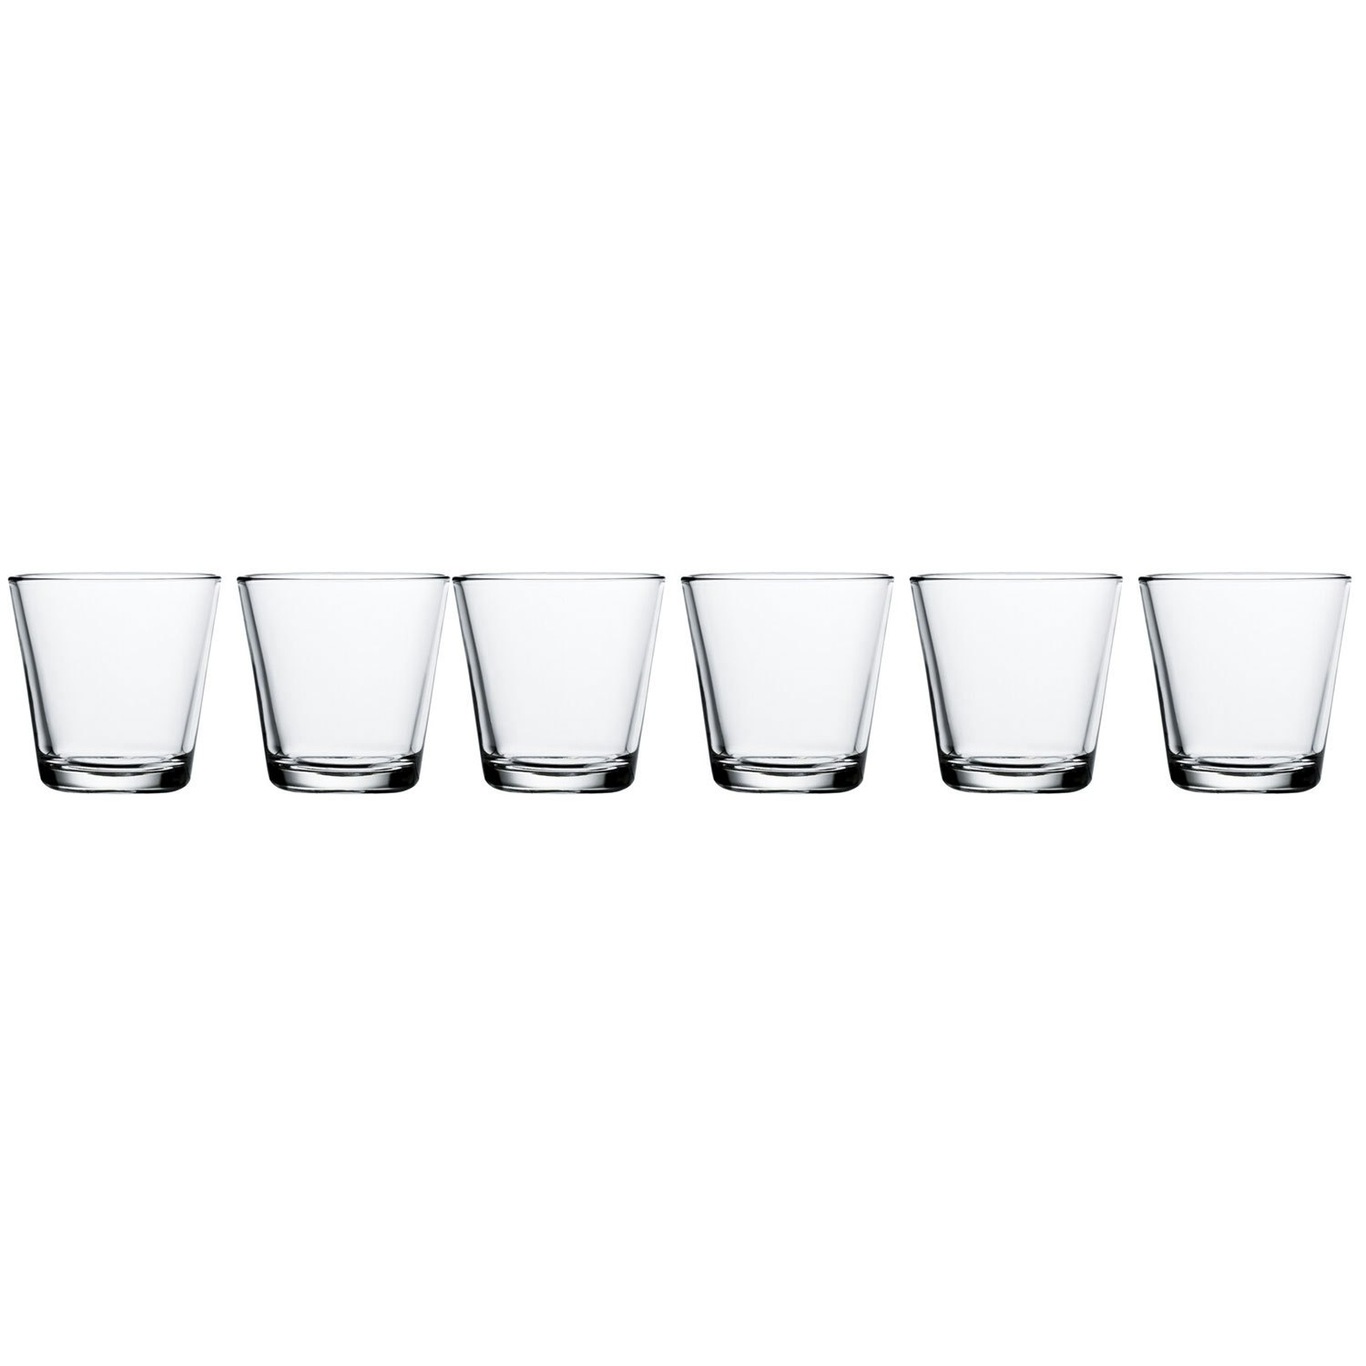 https://royaldesign.com/image/2/iittala-kartio-drinking-glasses-6-pack-21-cl-0?w=800&quality=80